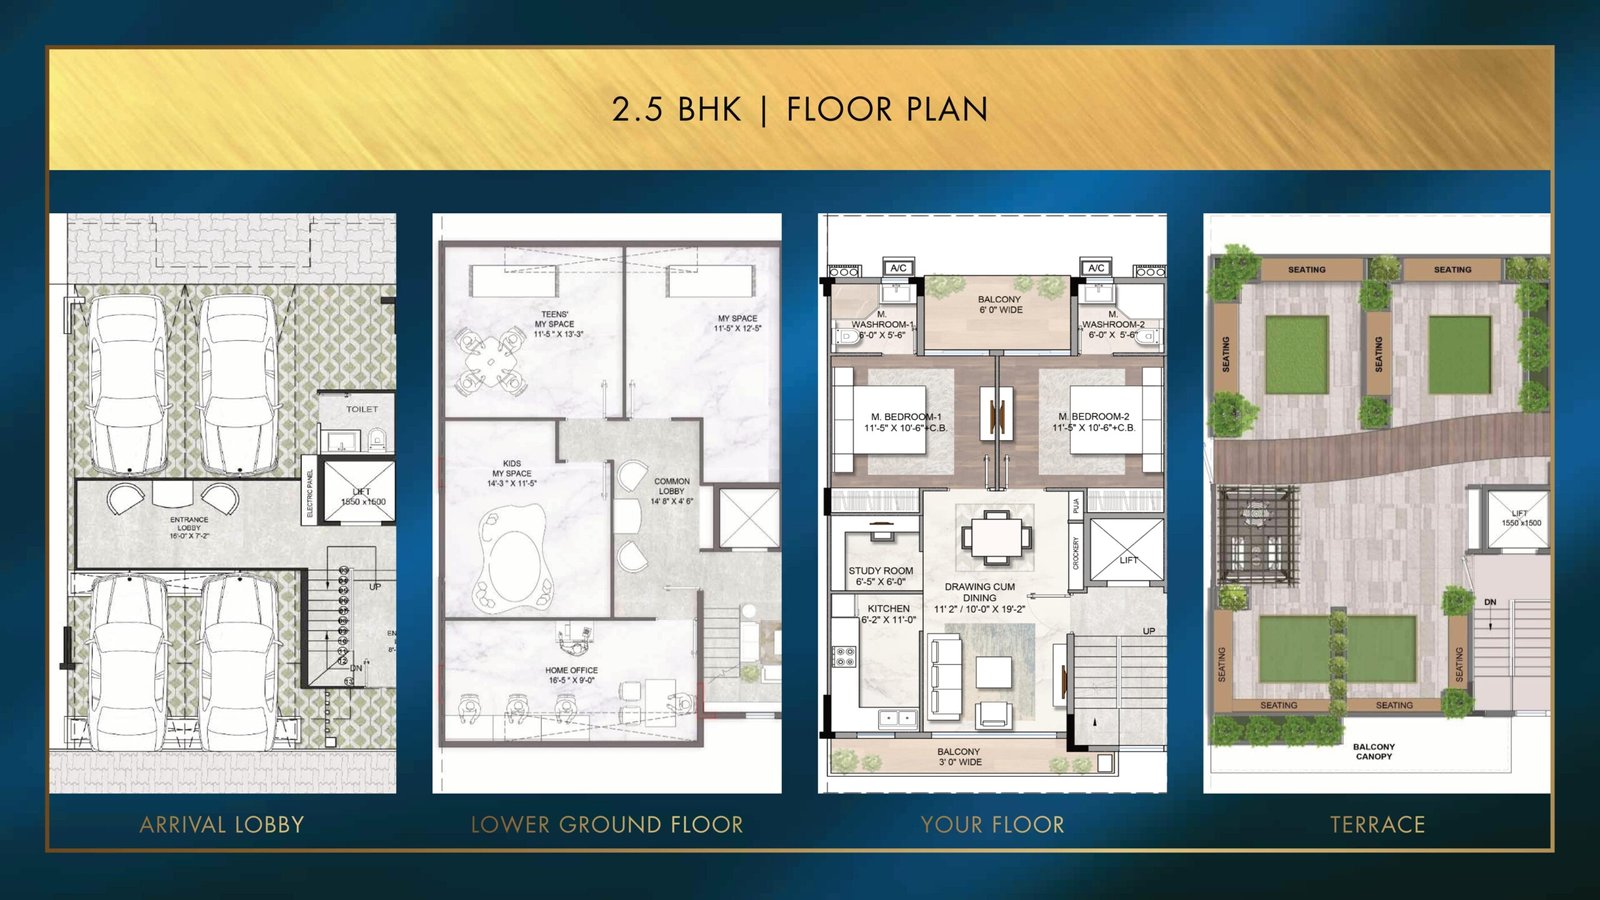 Smart World Developers Sector 89 Gurgaon 2.5 BHK Floor Plan with terrace floor Plan-min